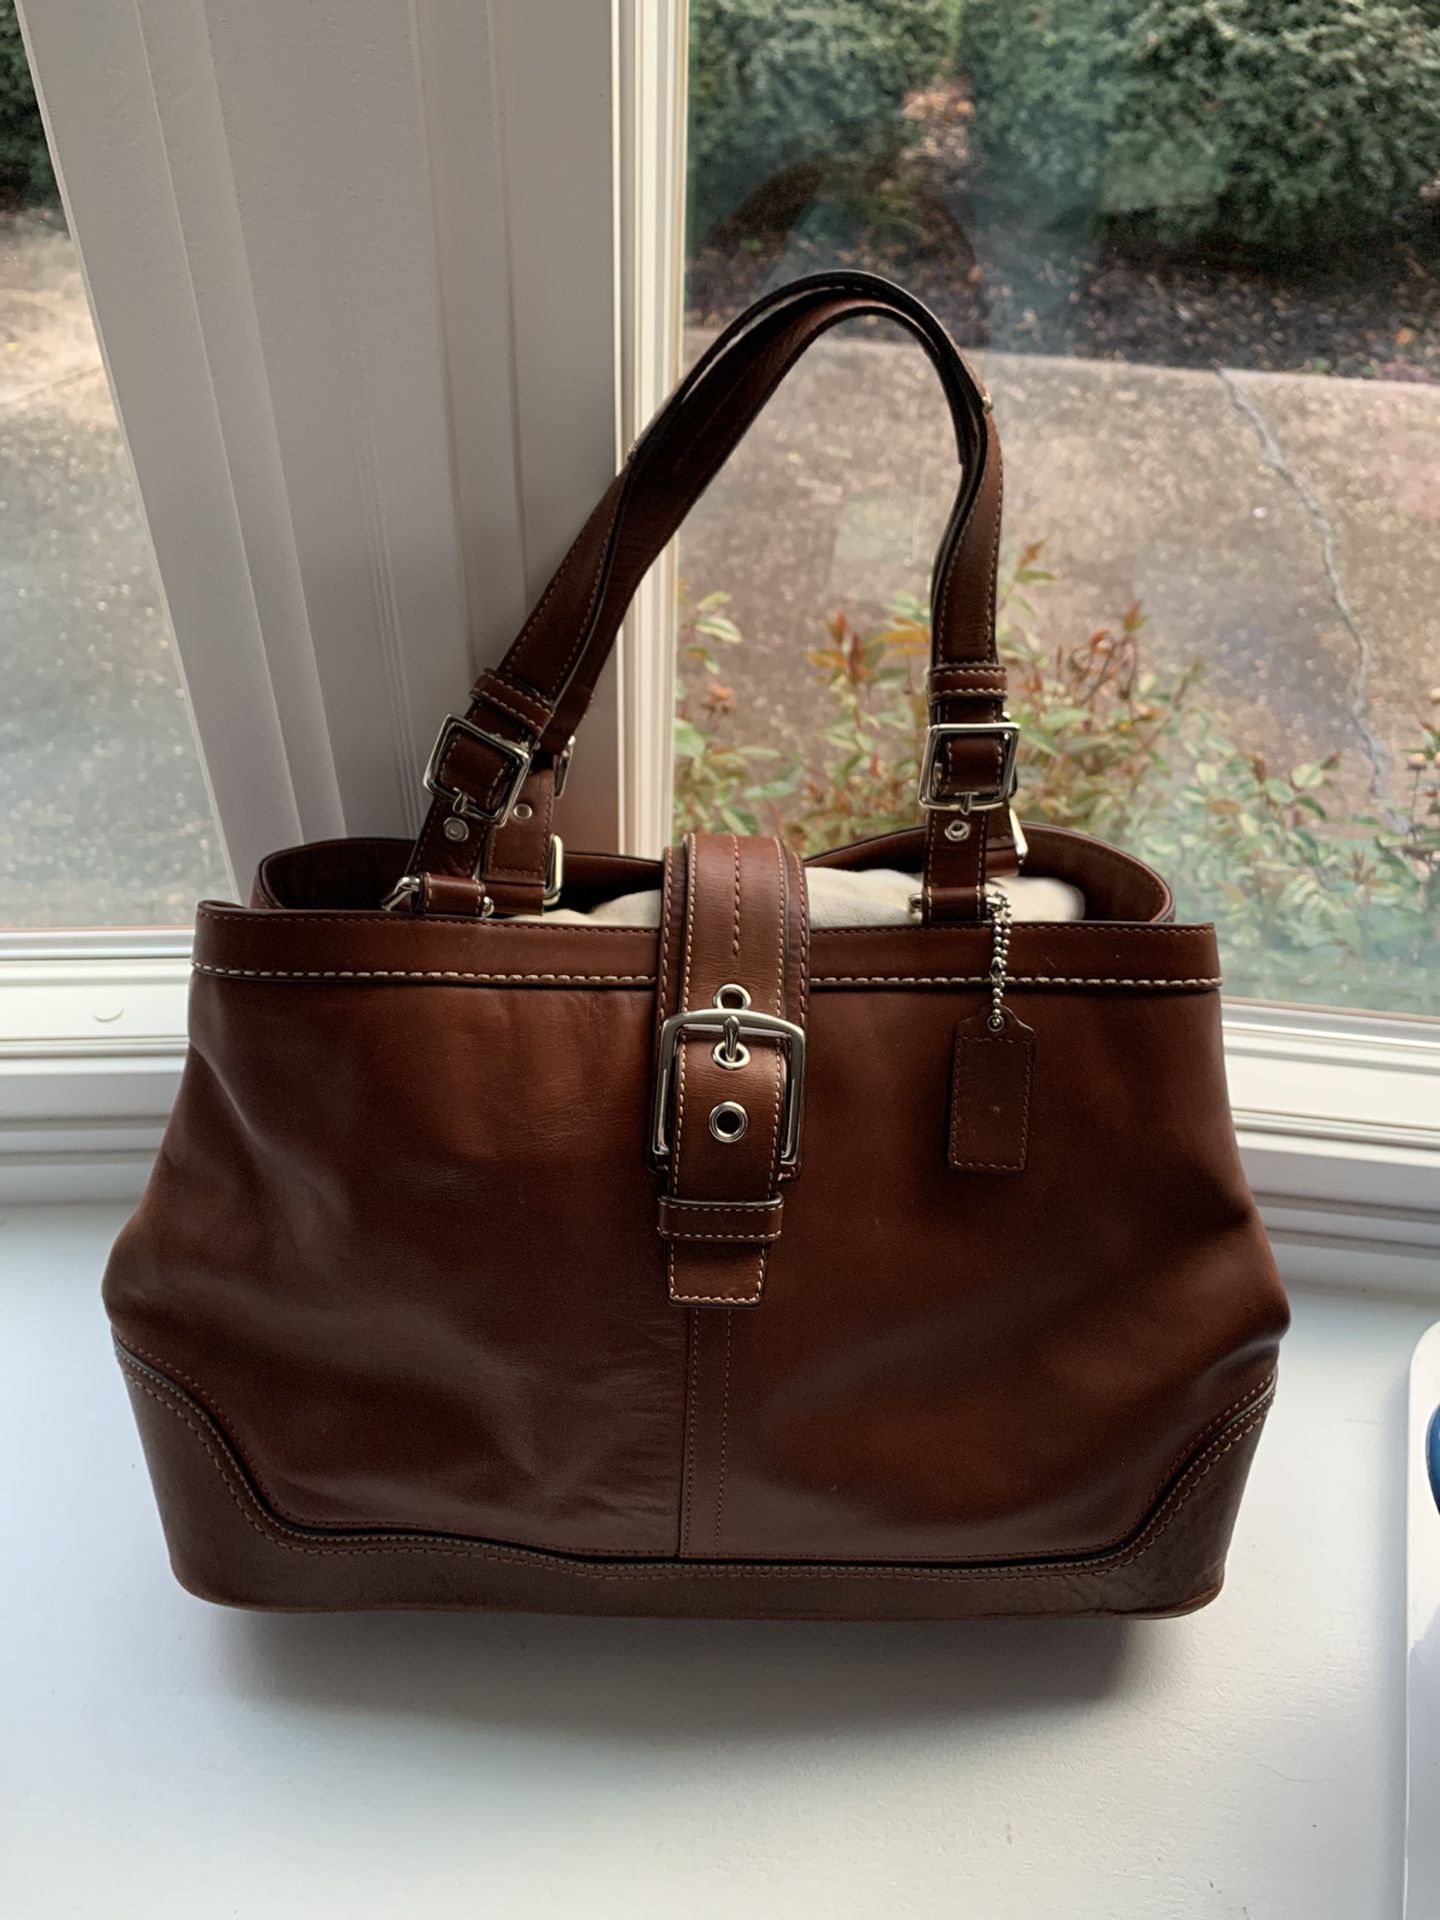 Beautiful leather coach bag